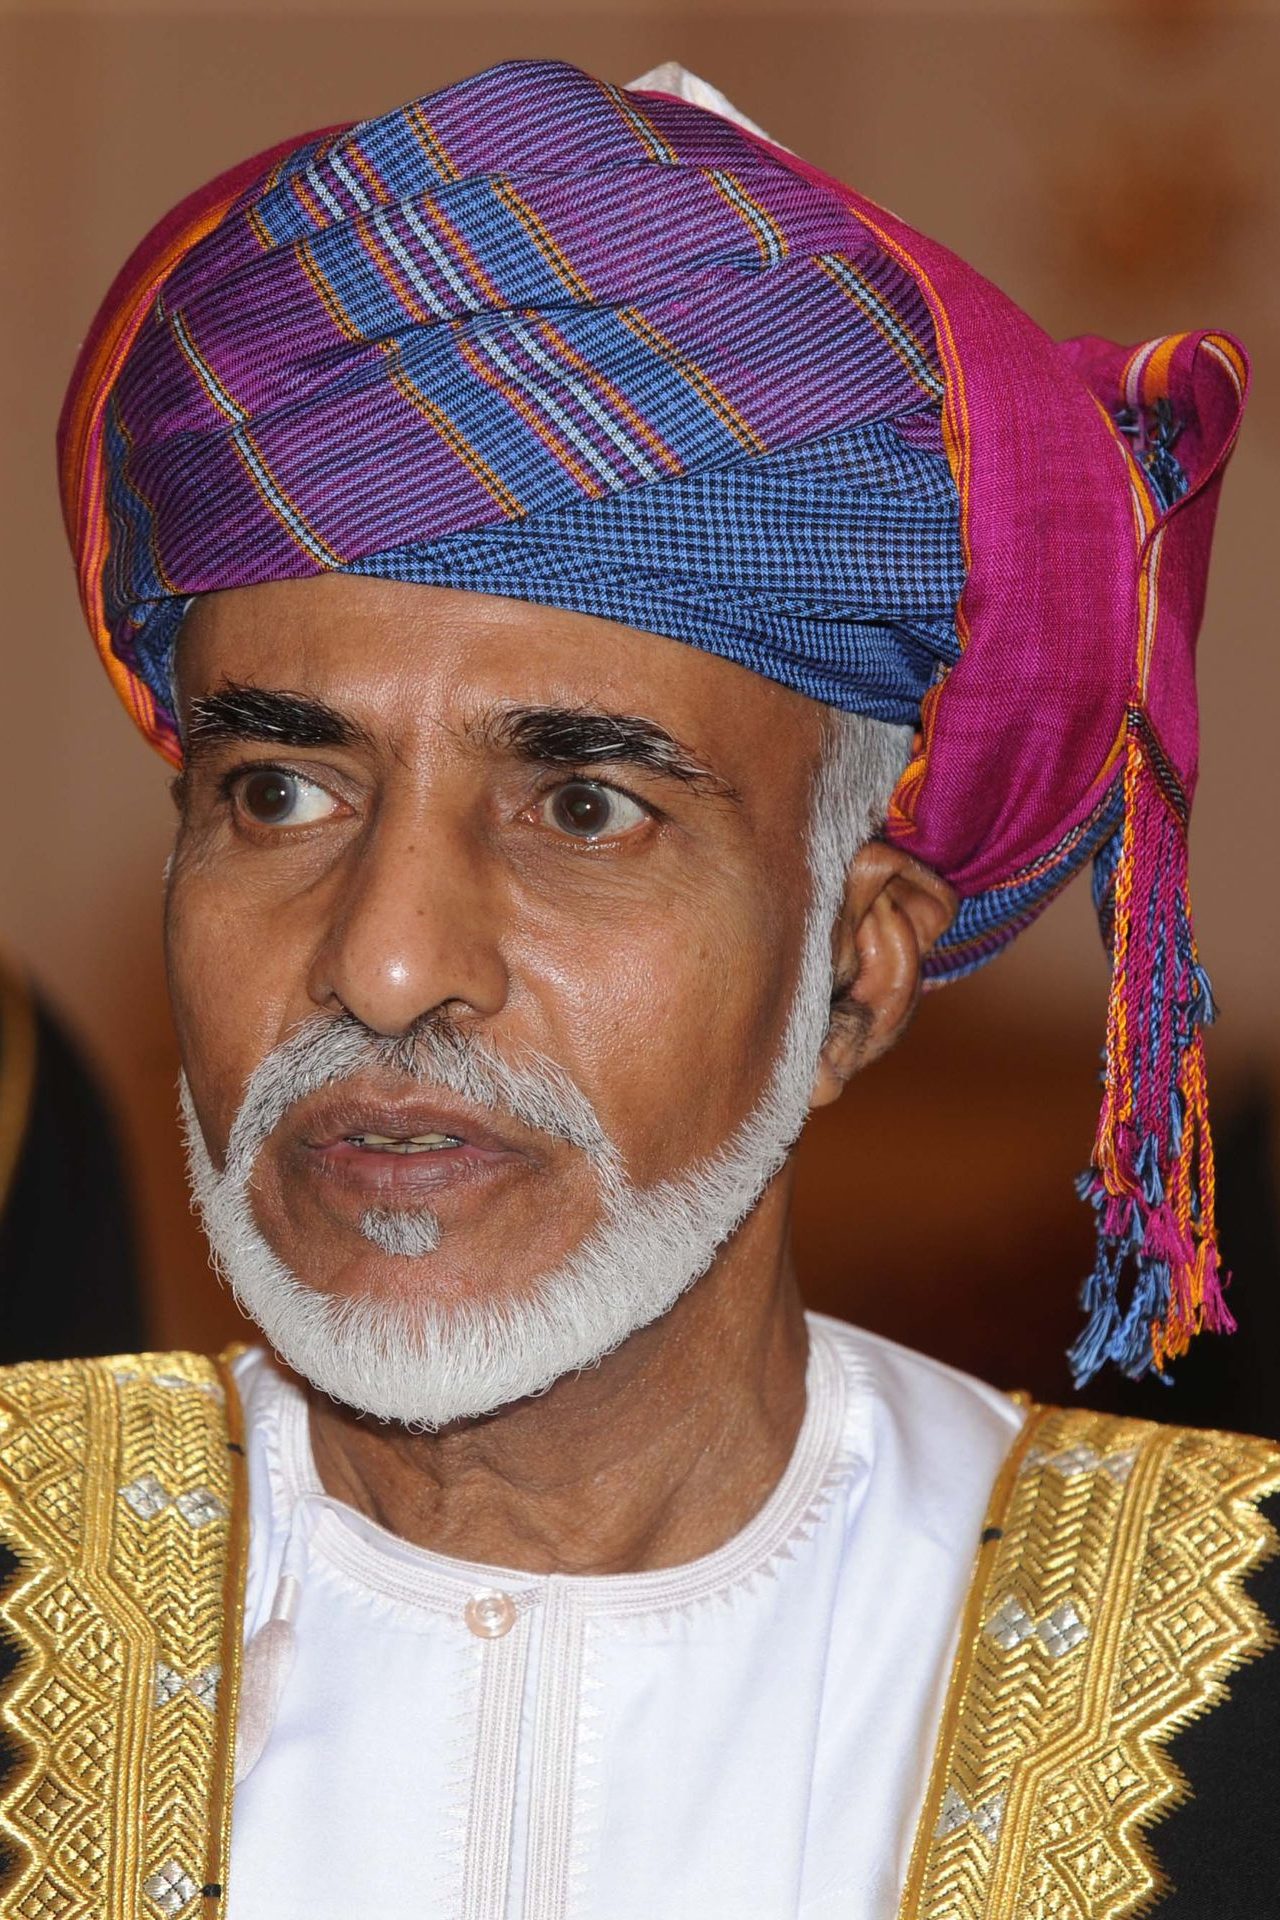 Qaboos ibn Saïd (Oman, 49 years from 1970 to 2020)